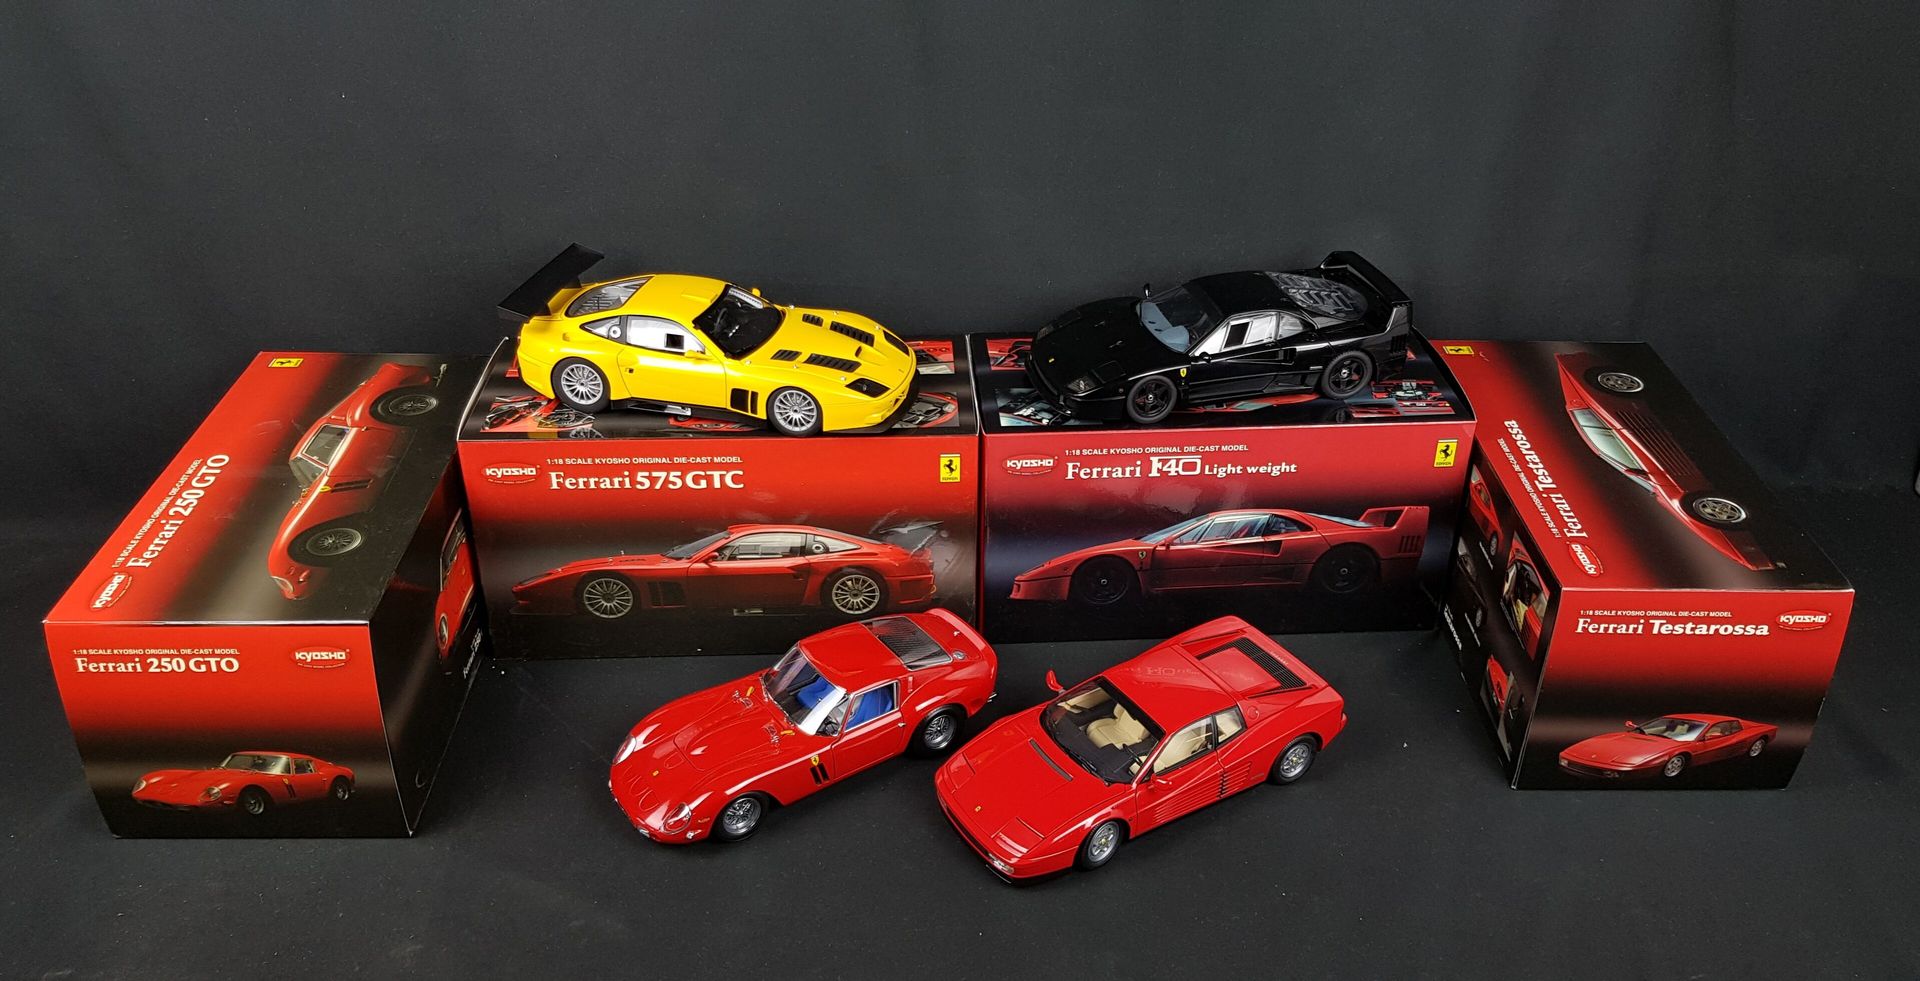 Null KYOSHO - QUATRE Ferrari échelle 1/18 :

1x F40 Light White

1x 575 GTC

1x &hellip;